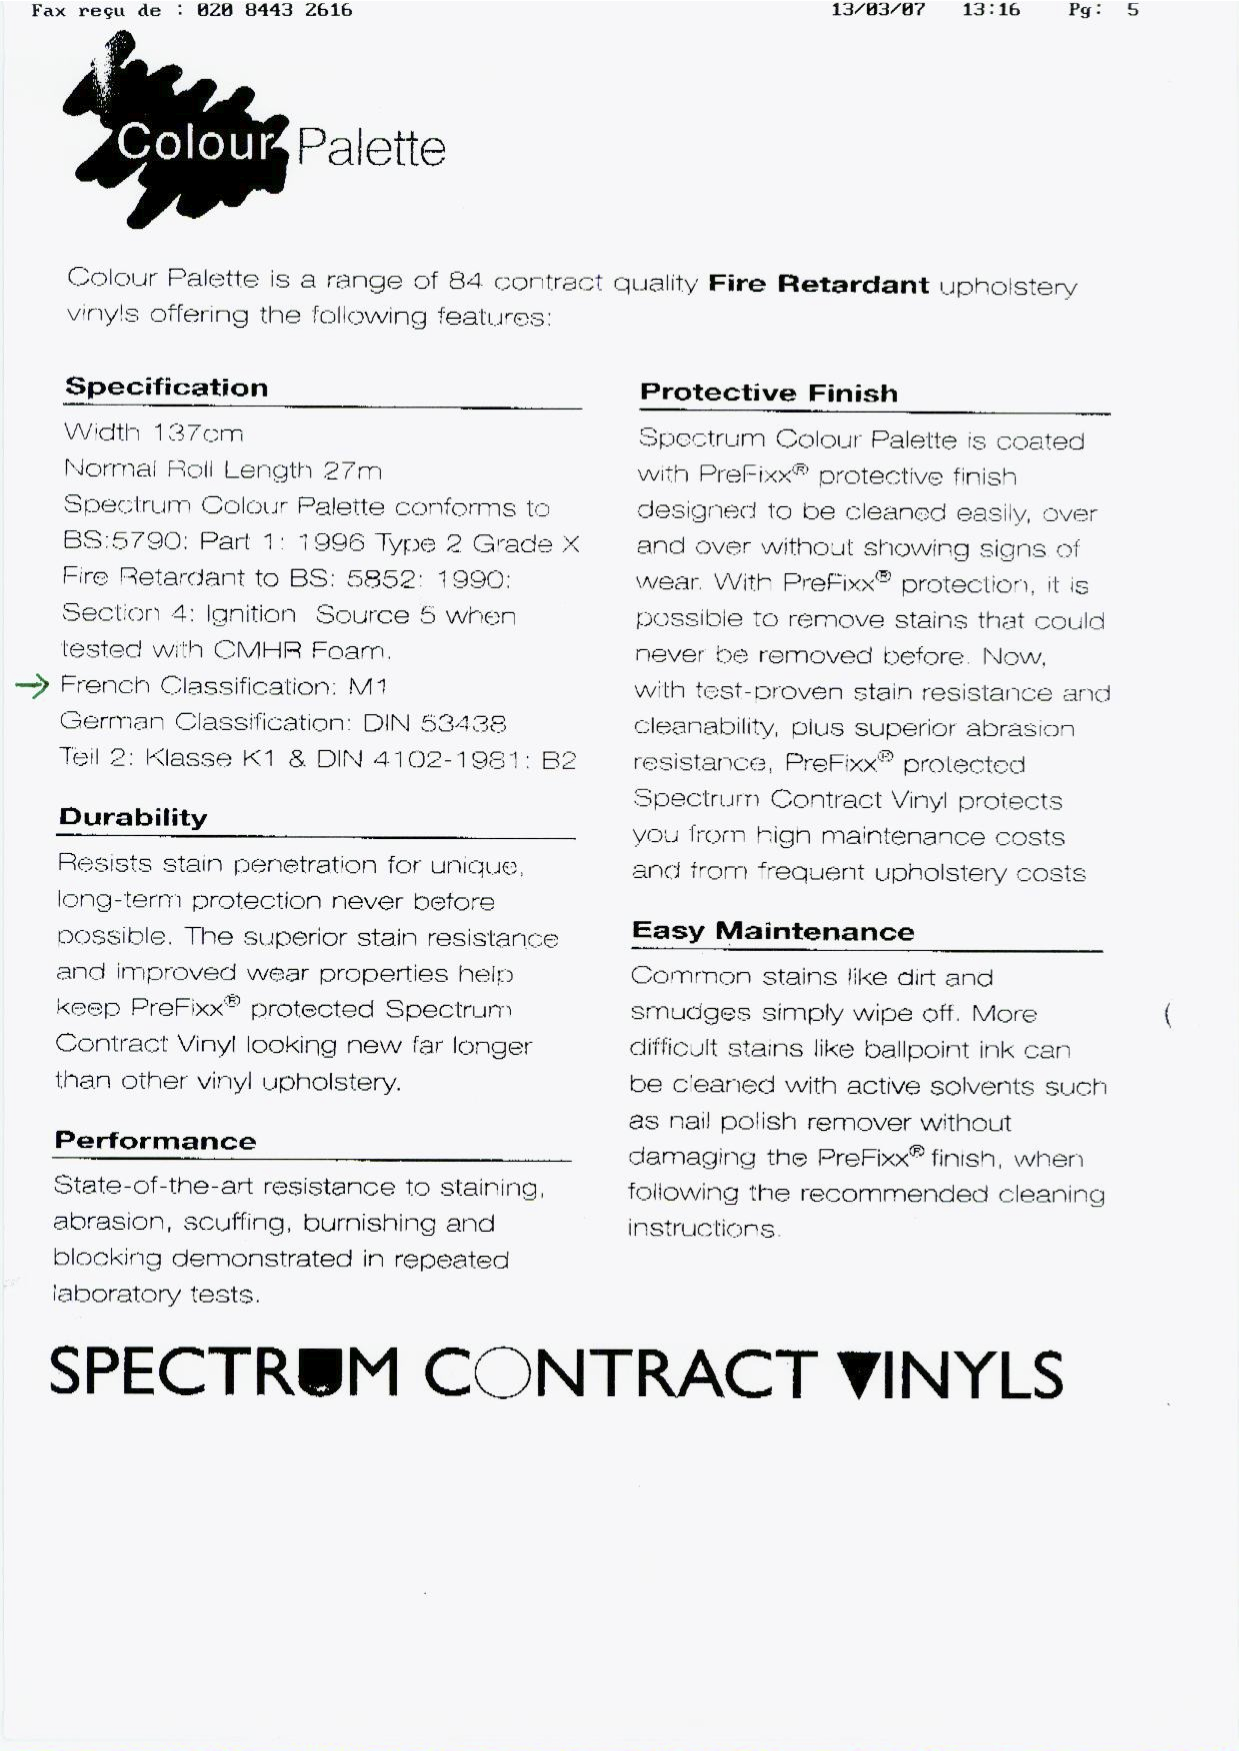 Spectrum vinyl caracteristics & stain removal